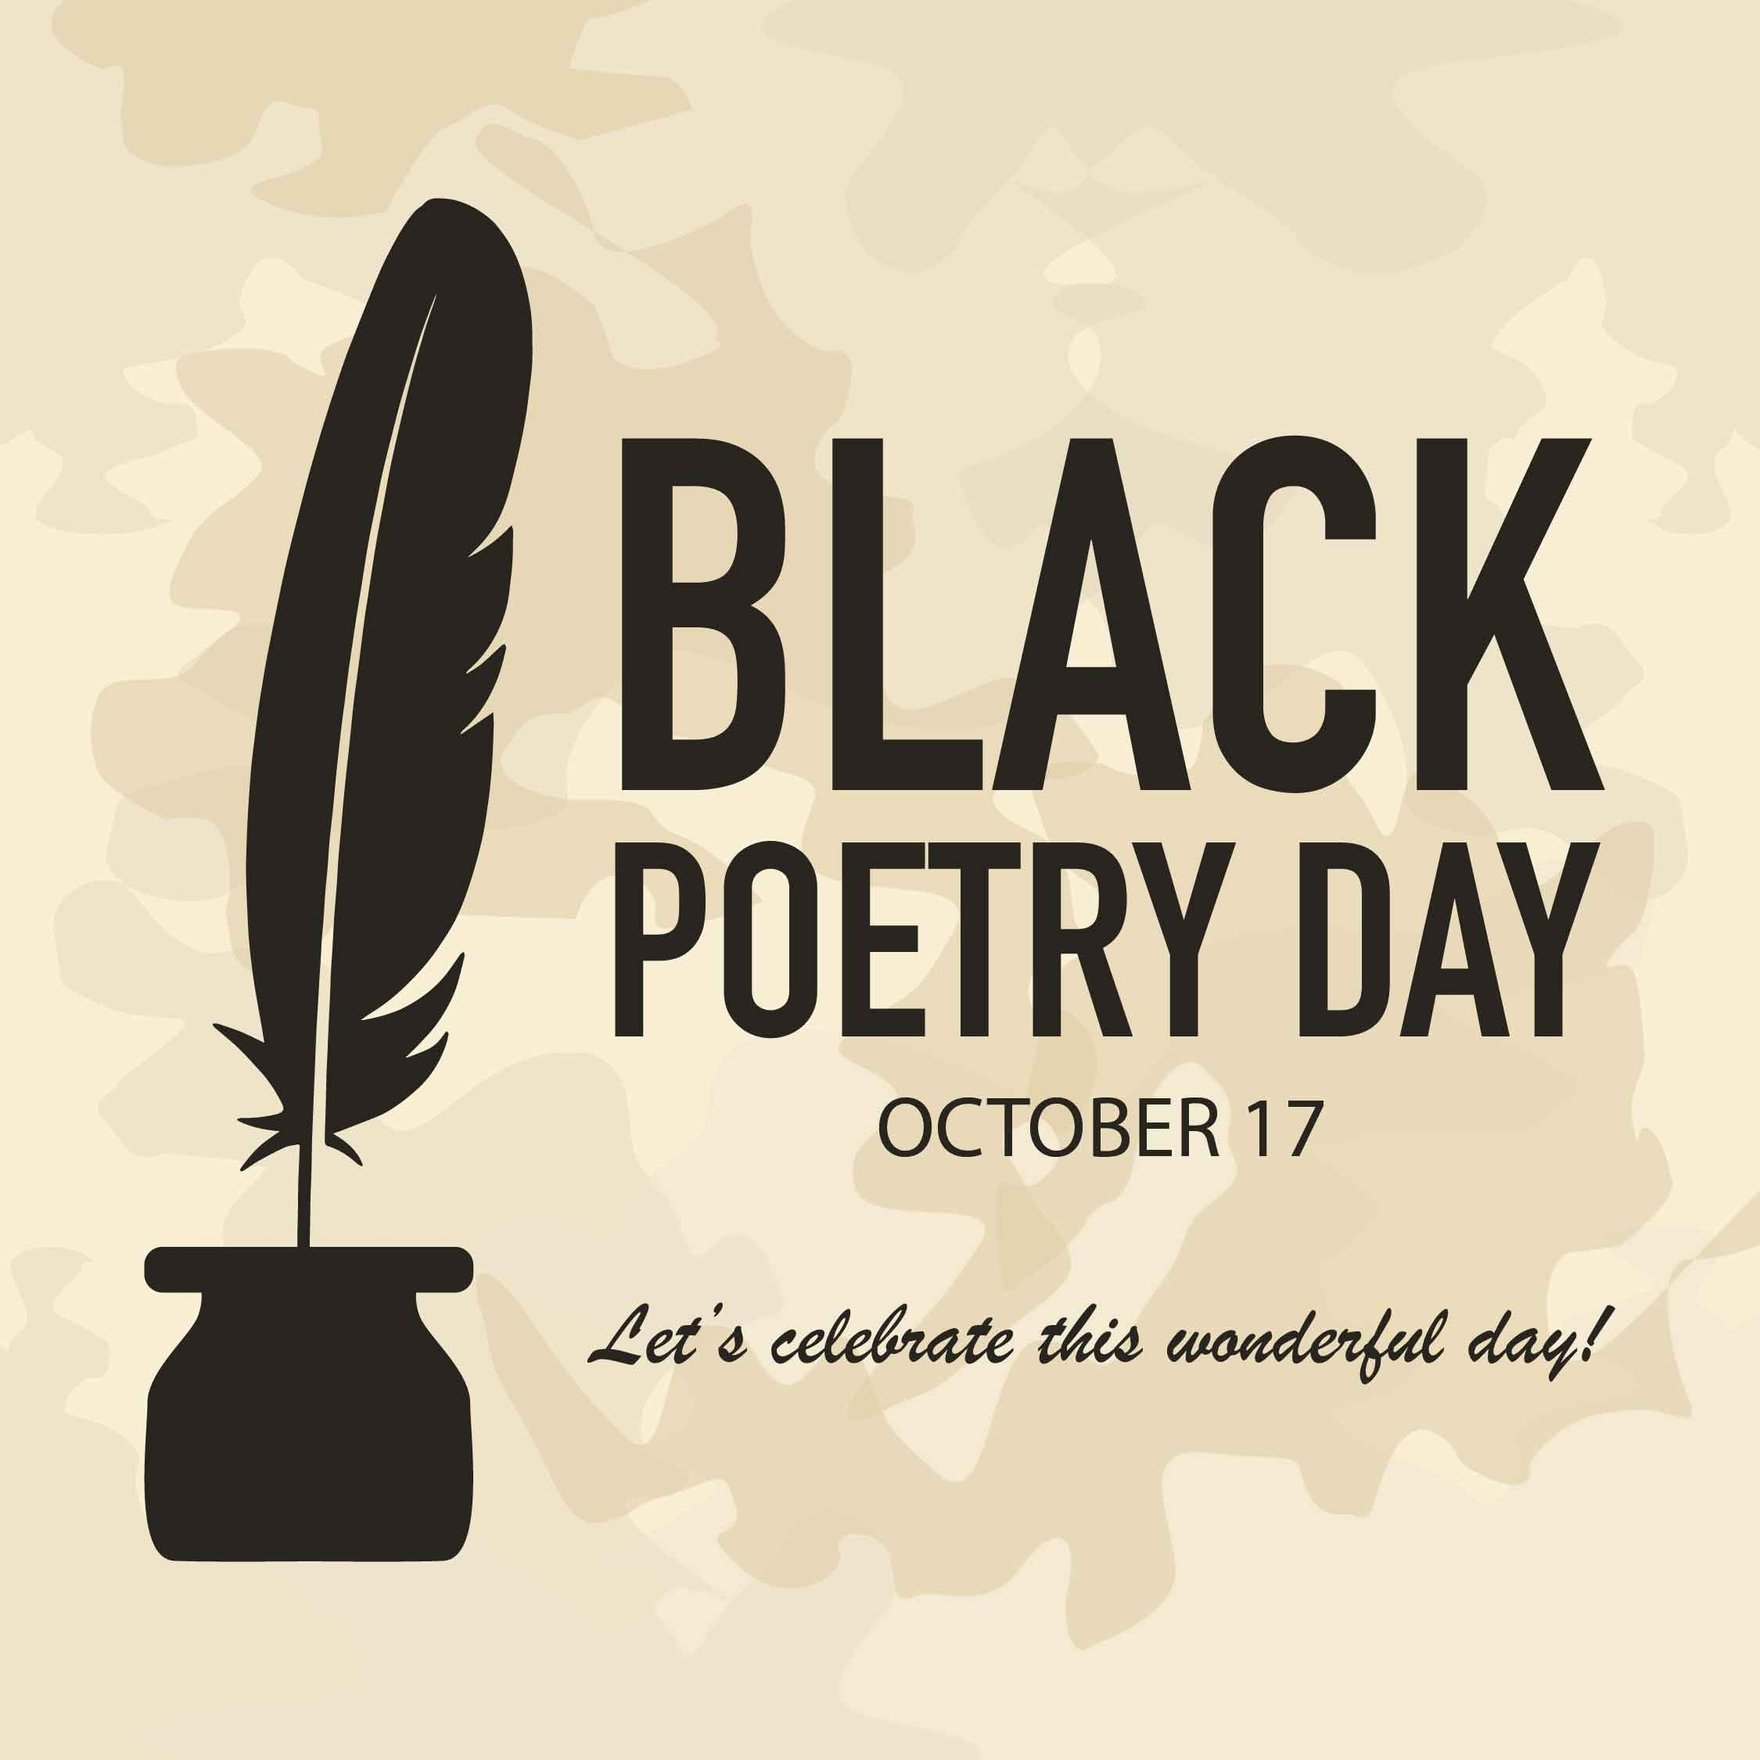 Free Black Poetry Day Instagram Post in Illustrator, PSD, EPS, SVG, JPG, PNG